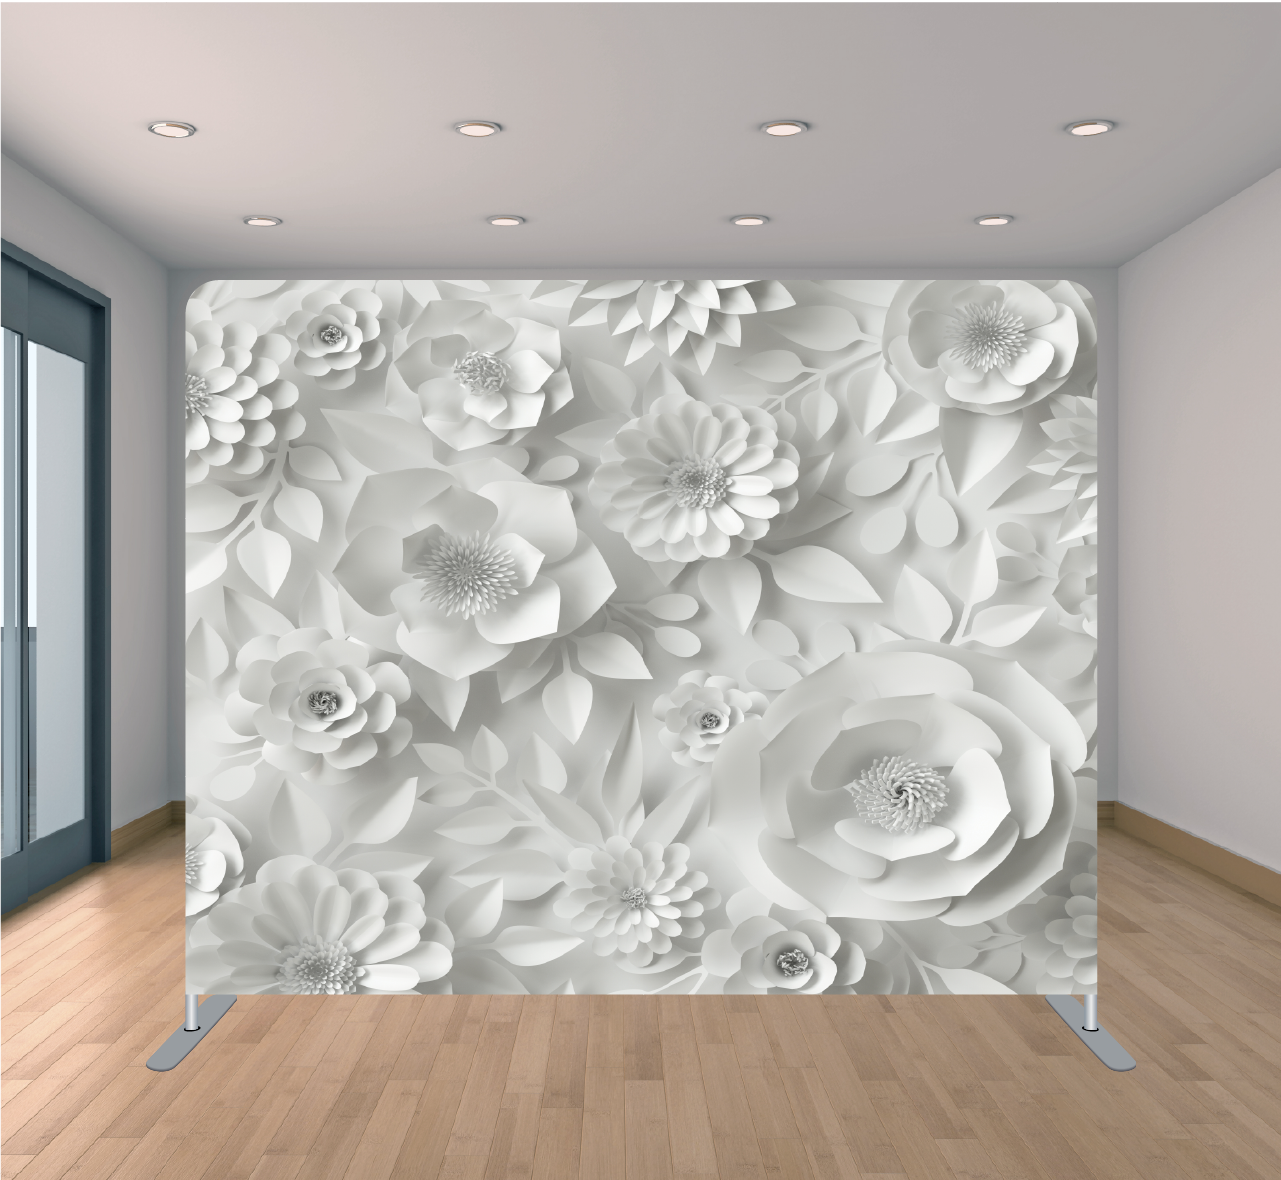 8X8ft Pillowcase Tension Backdrop- Paper Floral White